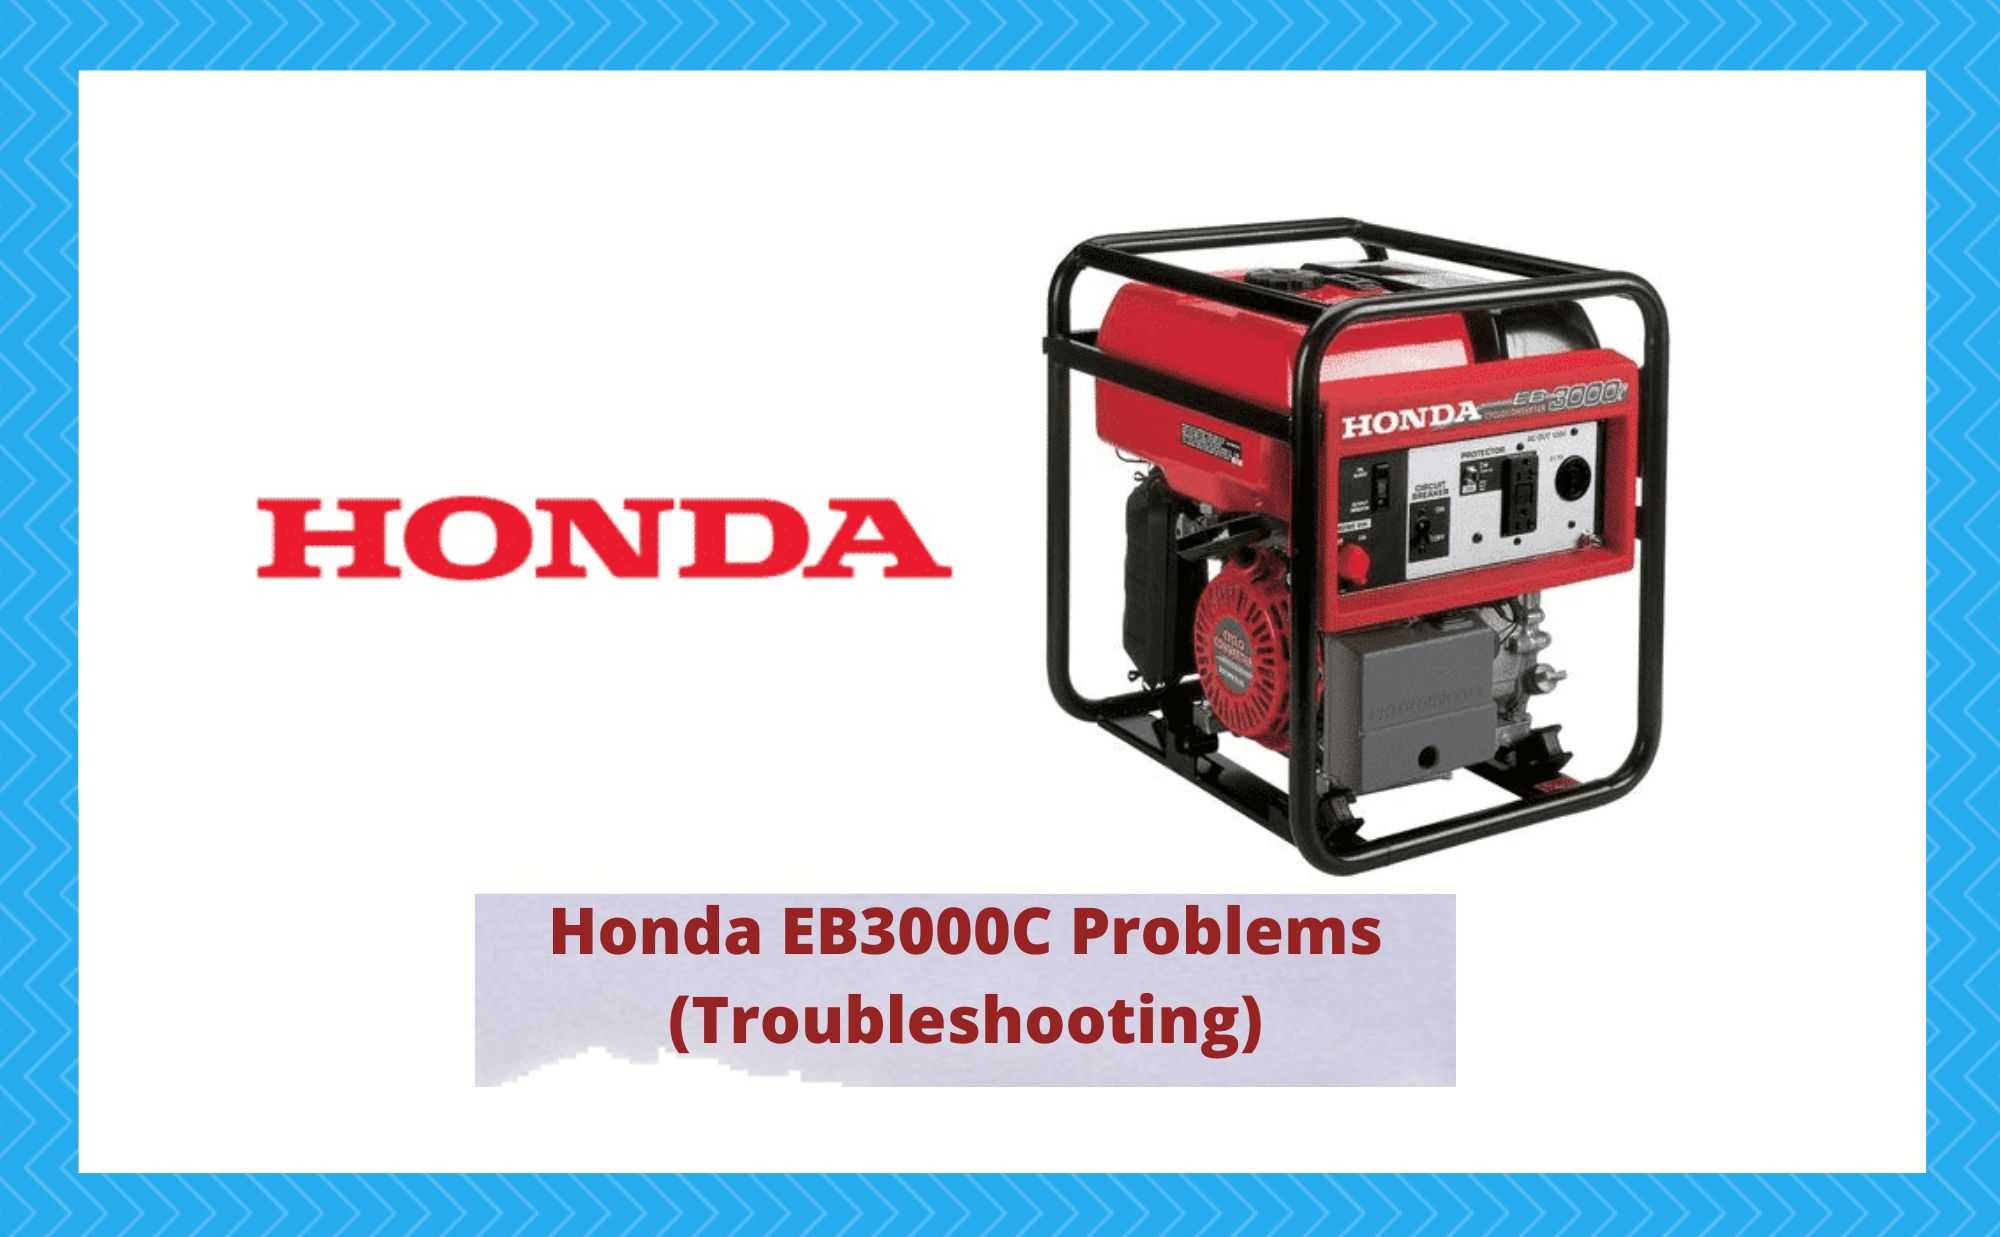 Honda EB3000C Troubleshooting